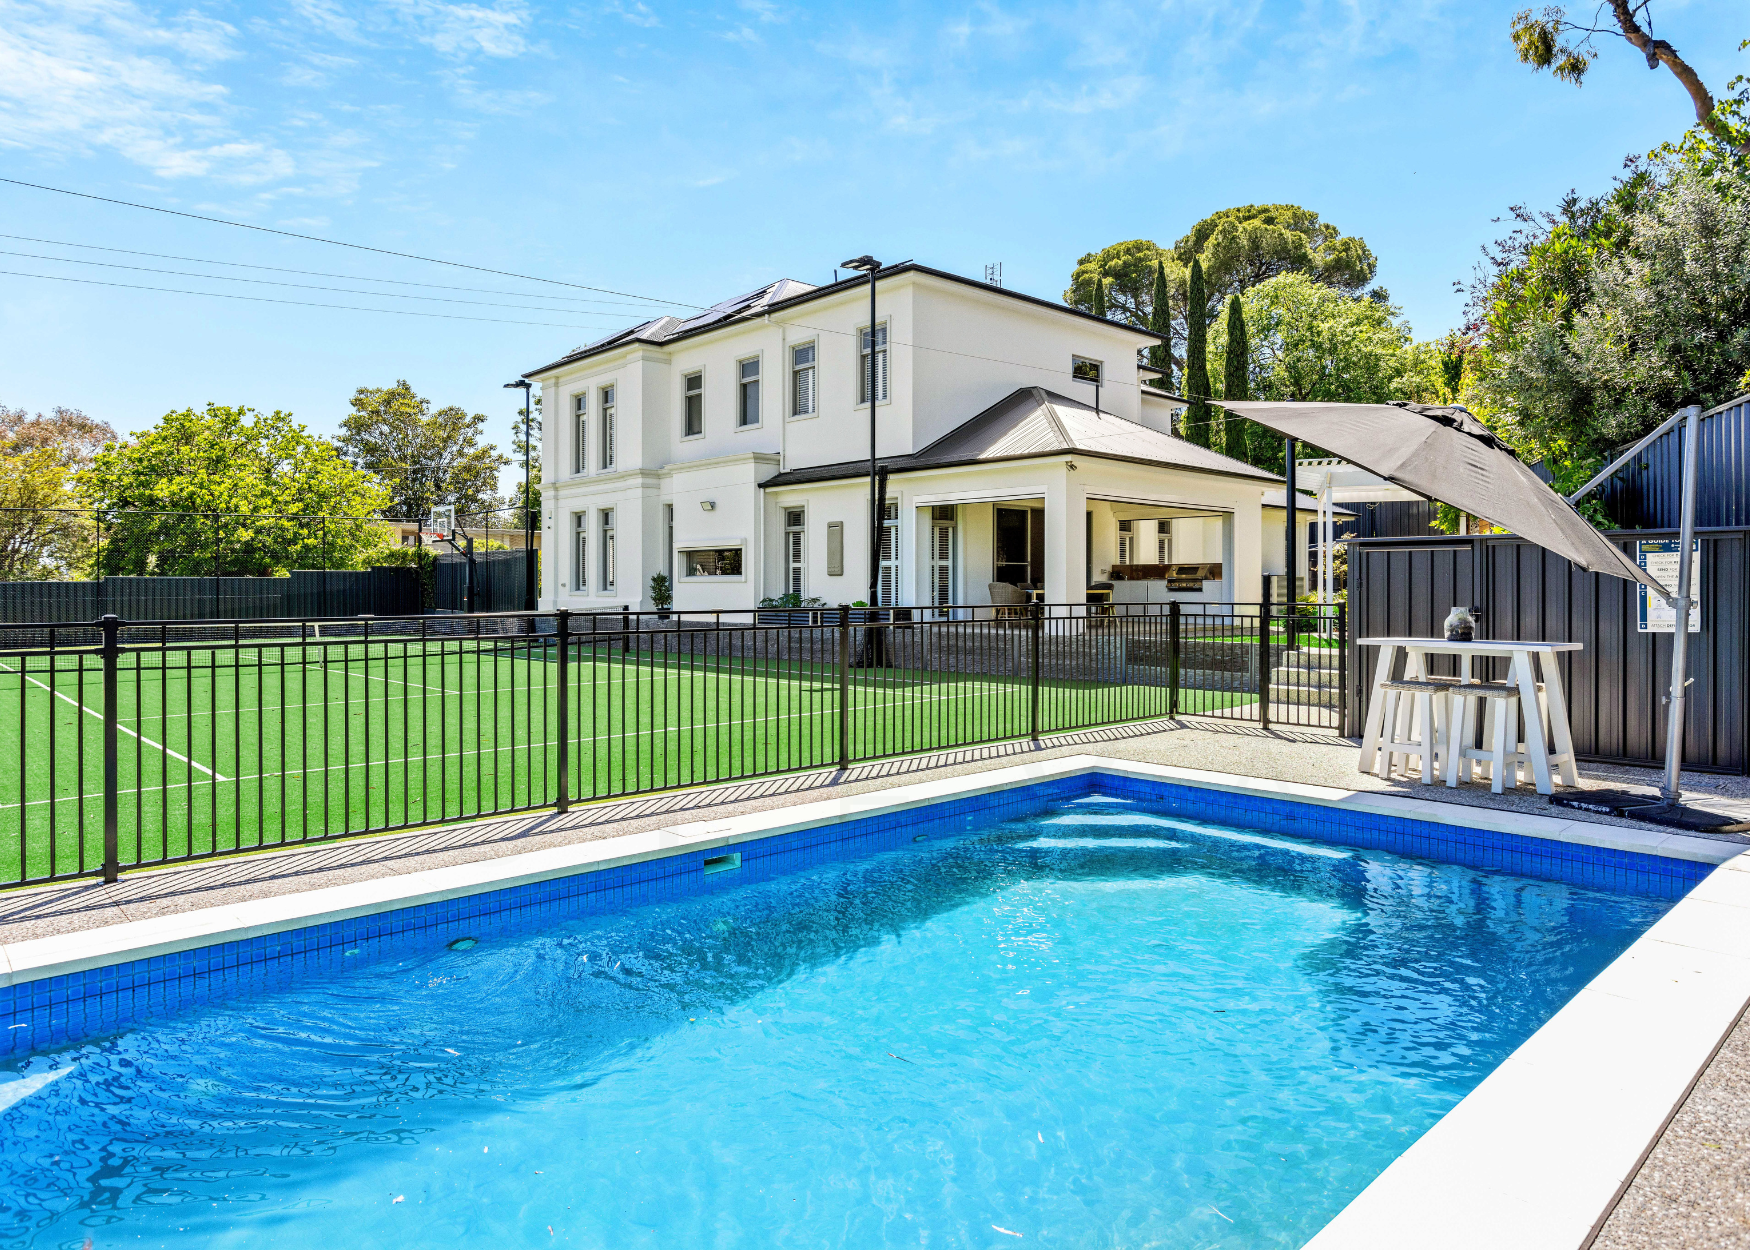 21 Katoomba Road Beaumont pool